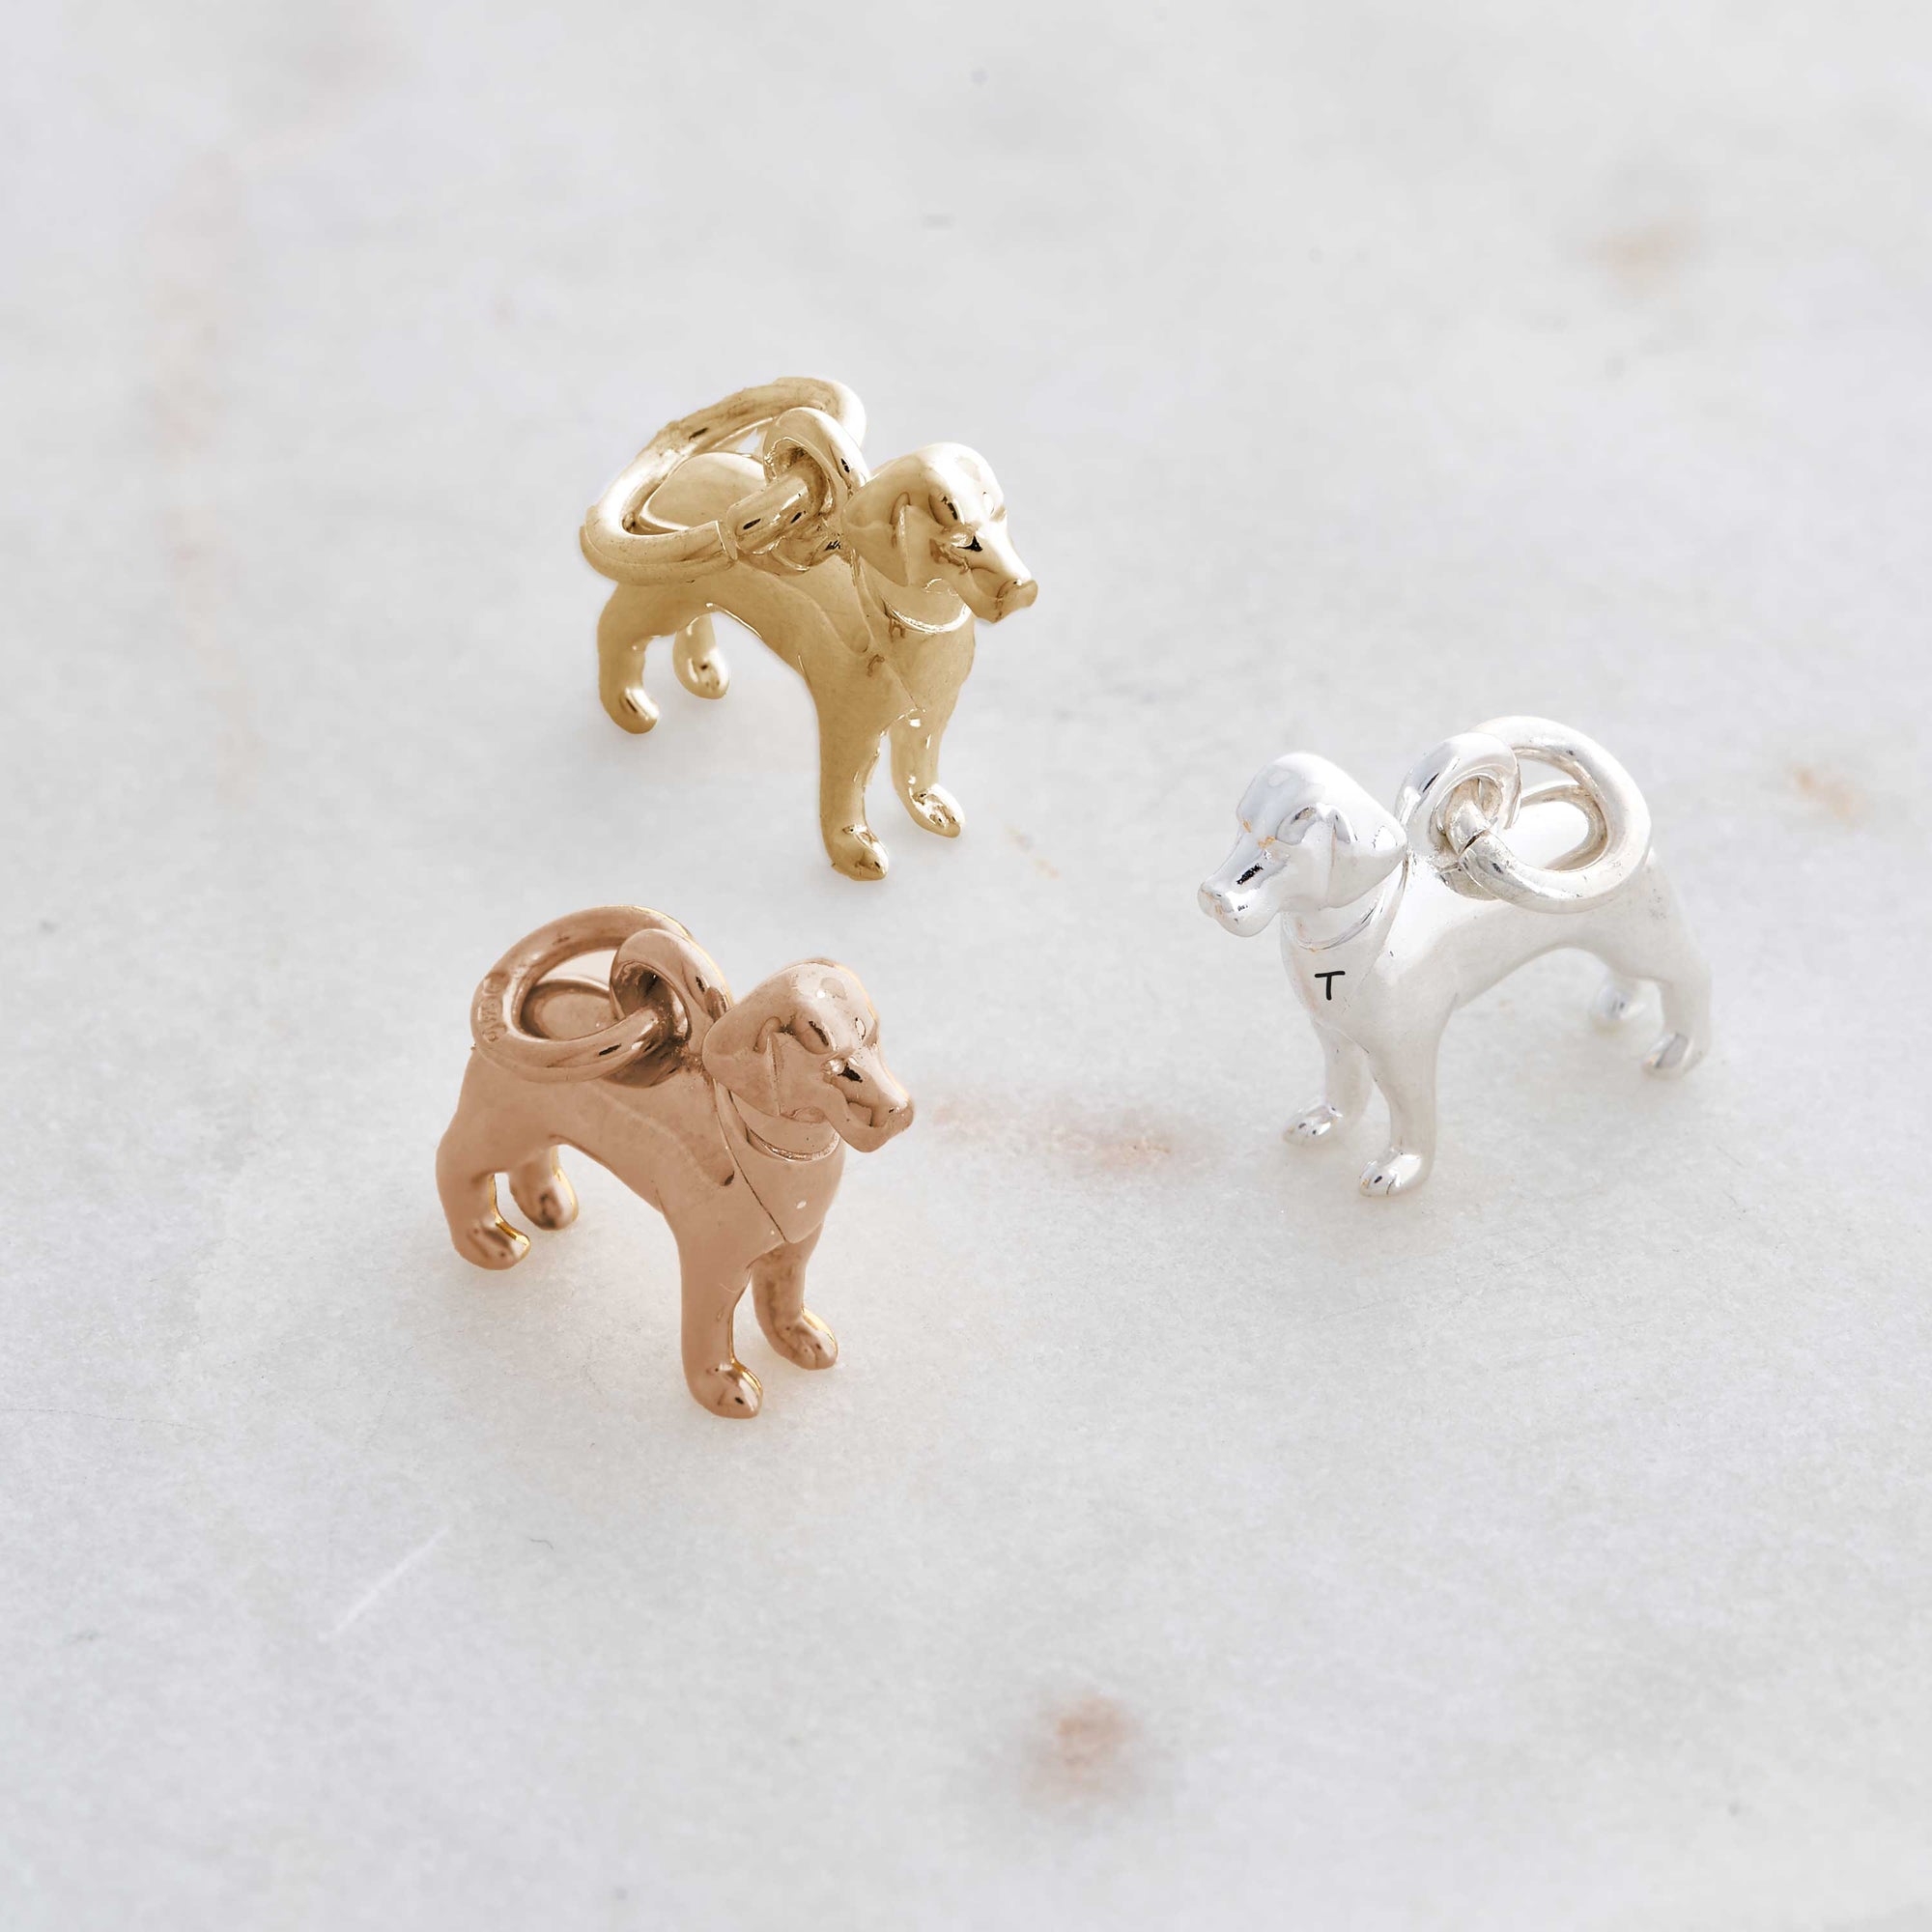 Labrador drakes head dog silver charm pendant scarlett jewellery